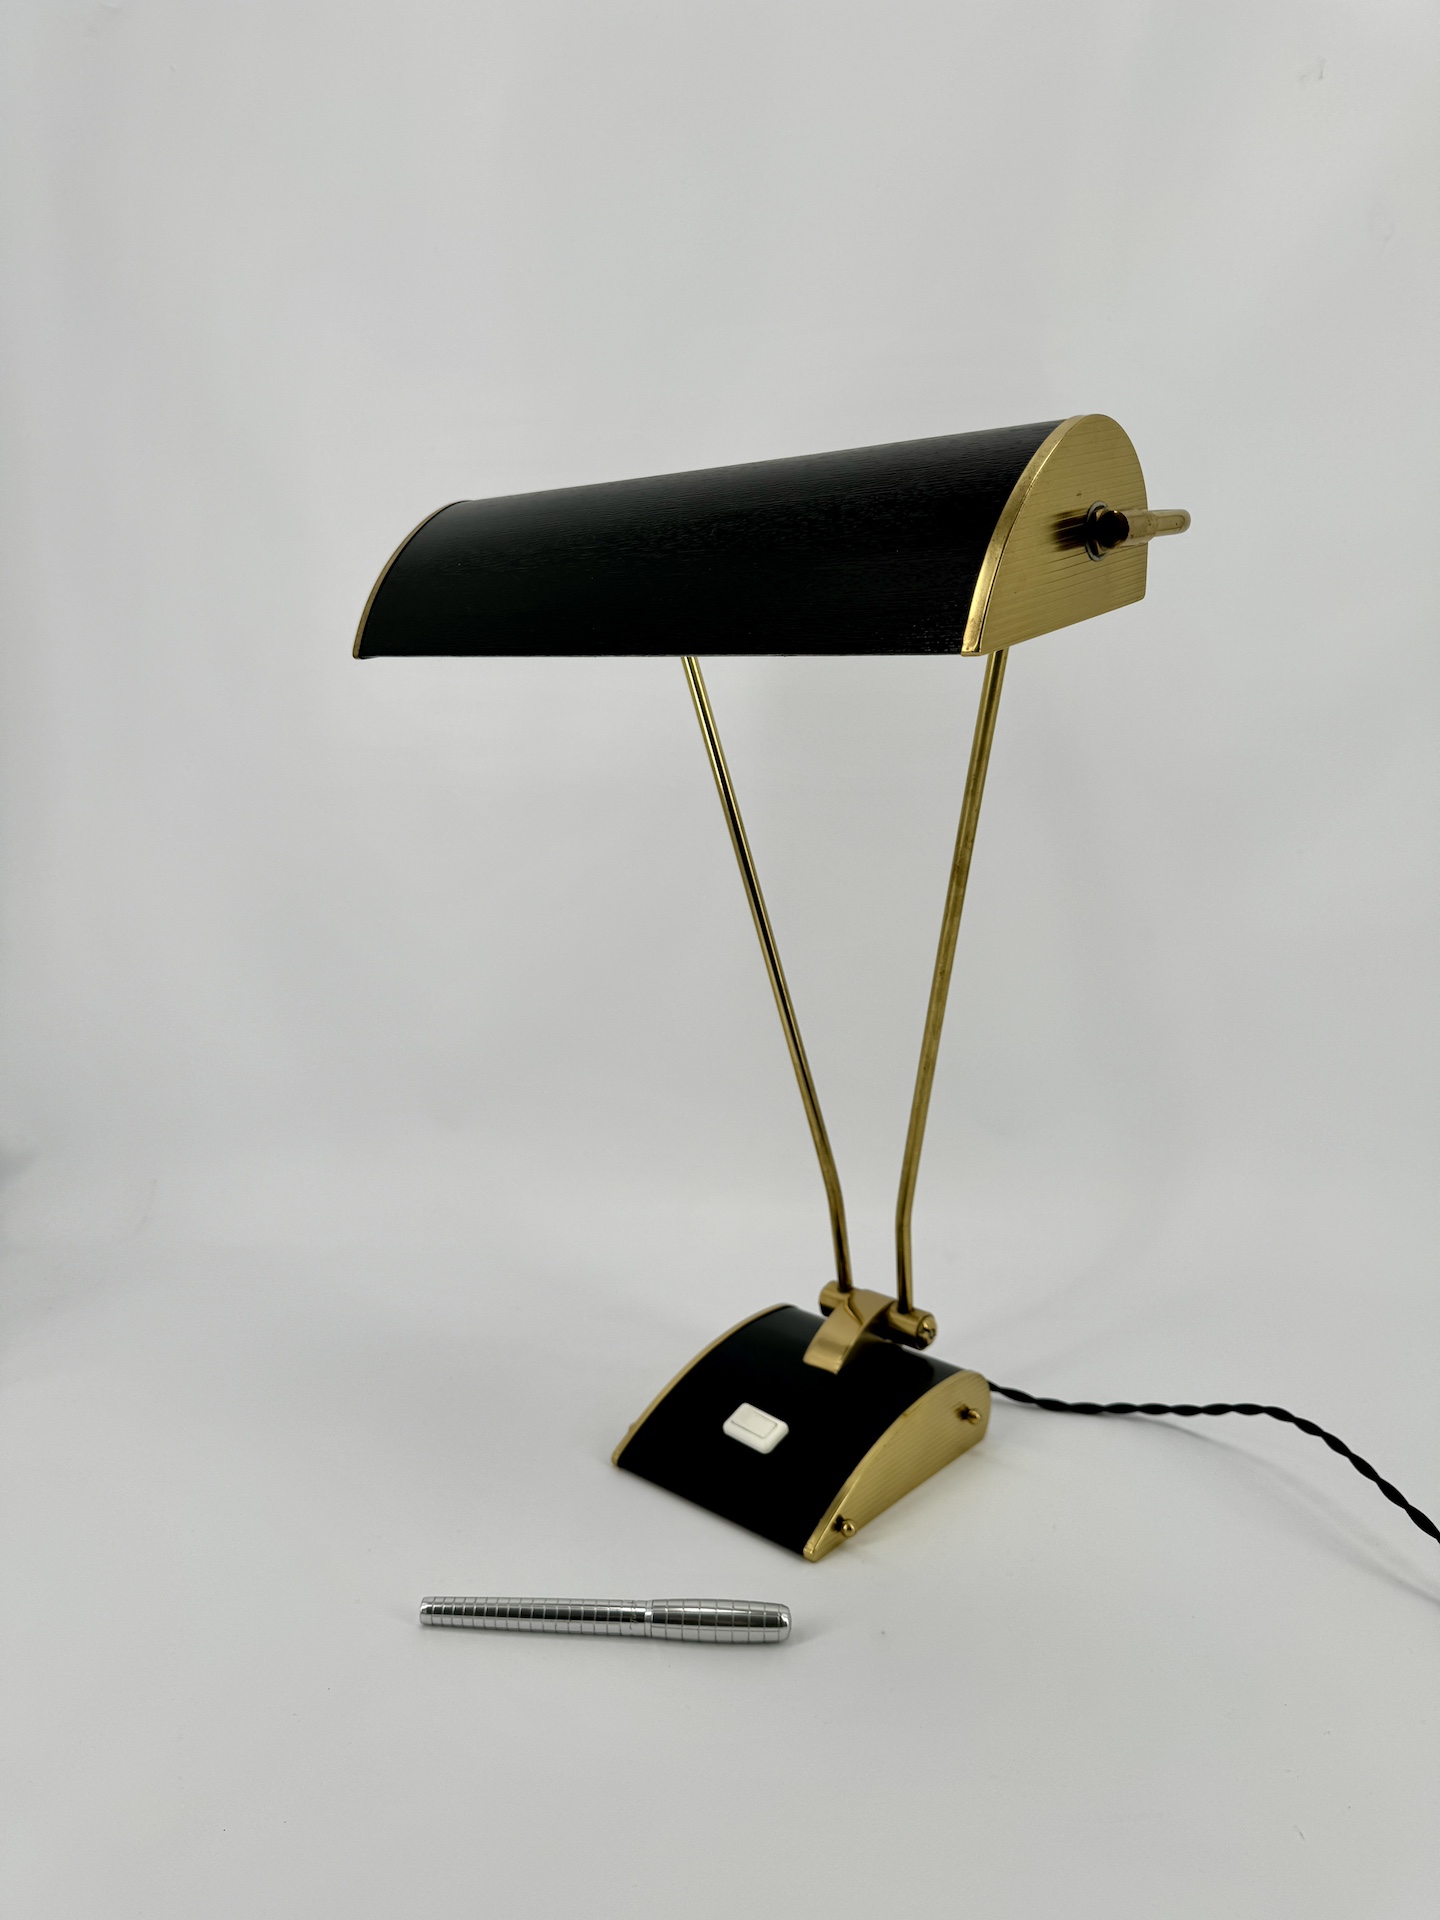 2 jumo table lamp black brass